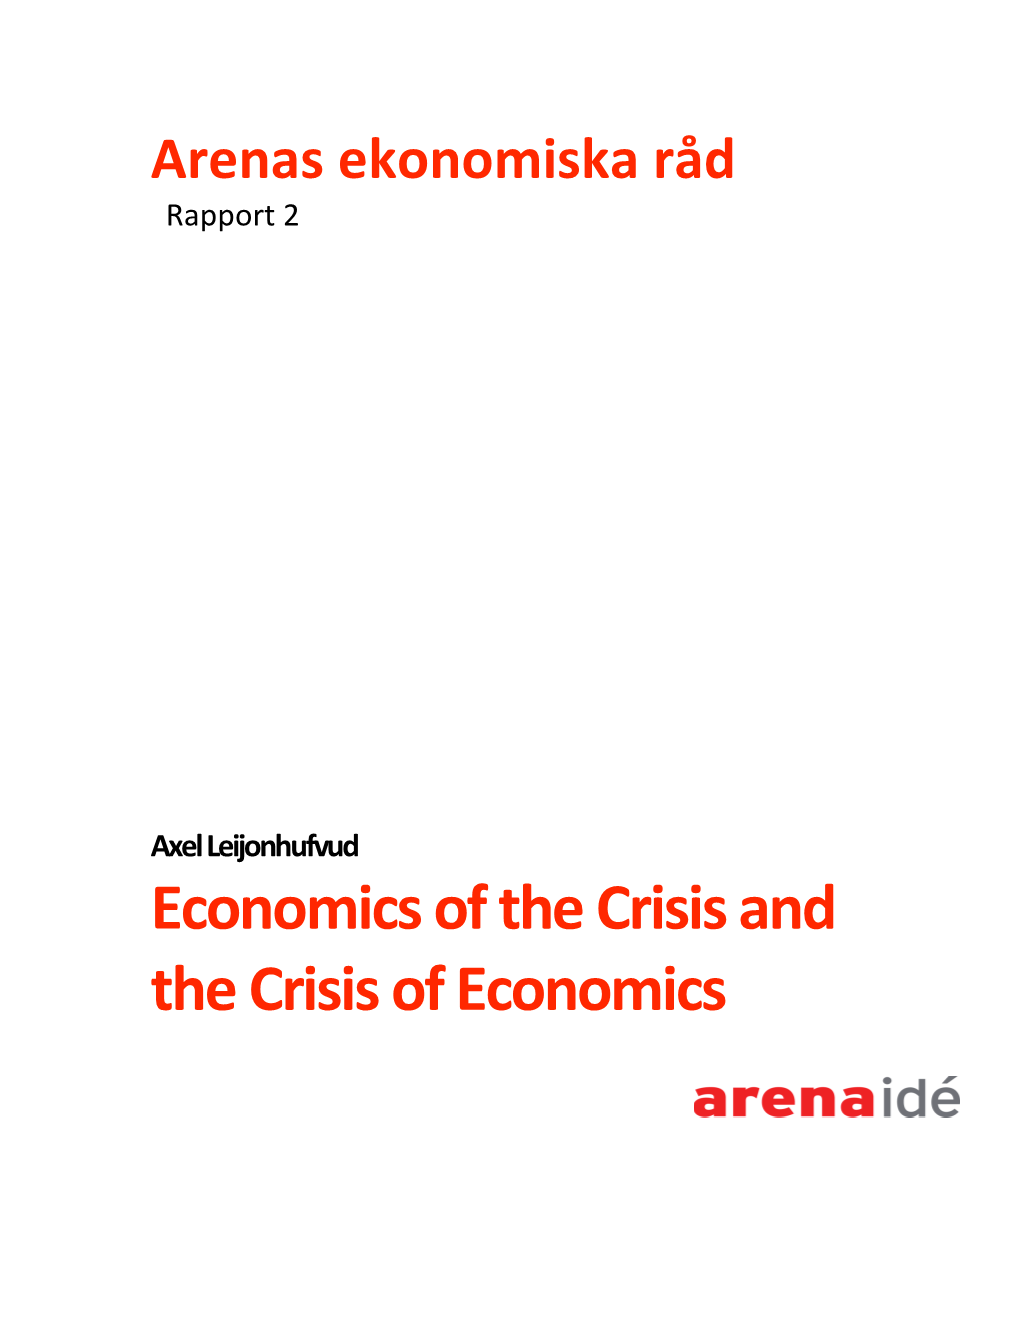 Economics of the Crisis and the Crisis of Economics 1